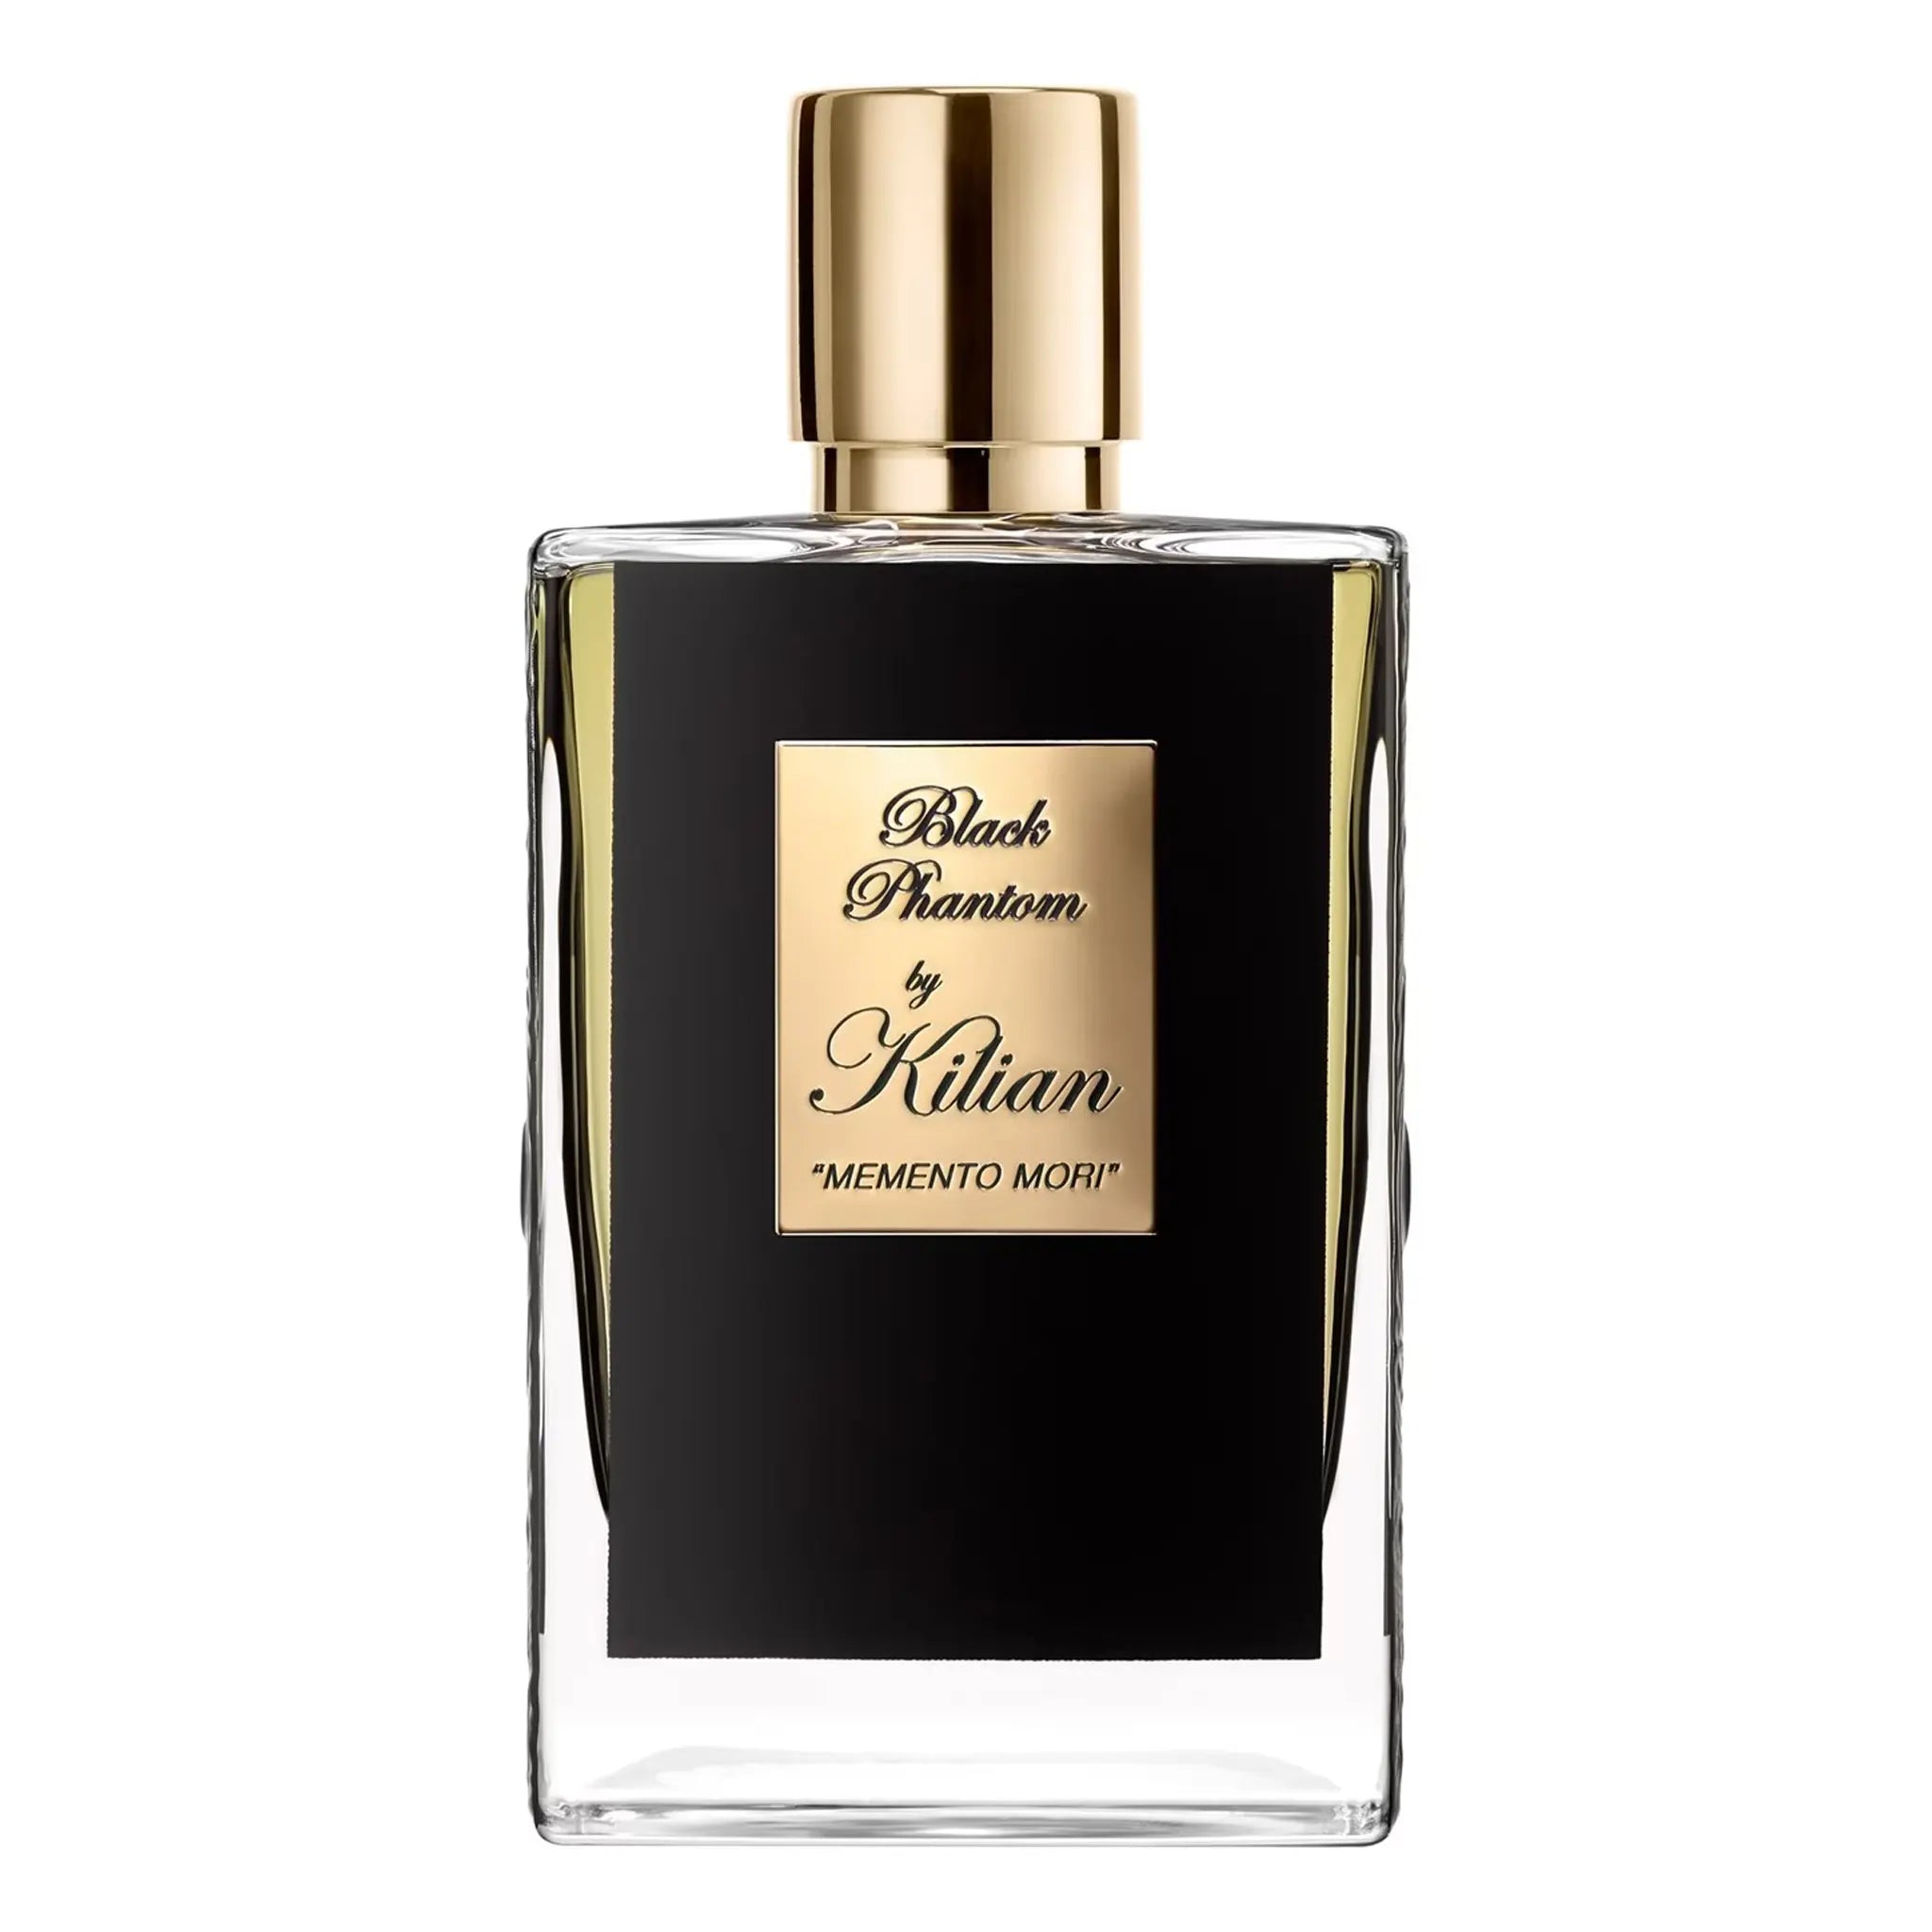 Front view of Killian Paris Black Phantom Memento Mori Perfume 50ml 46310221